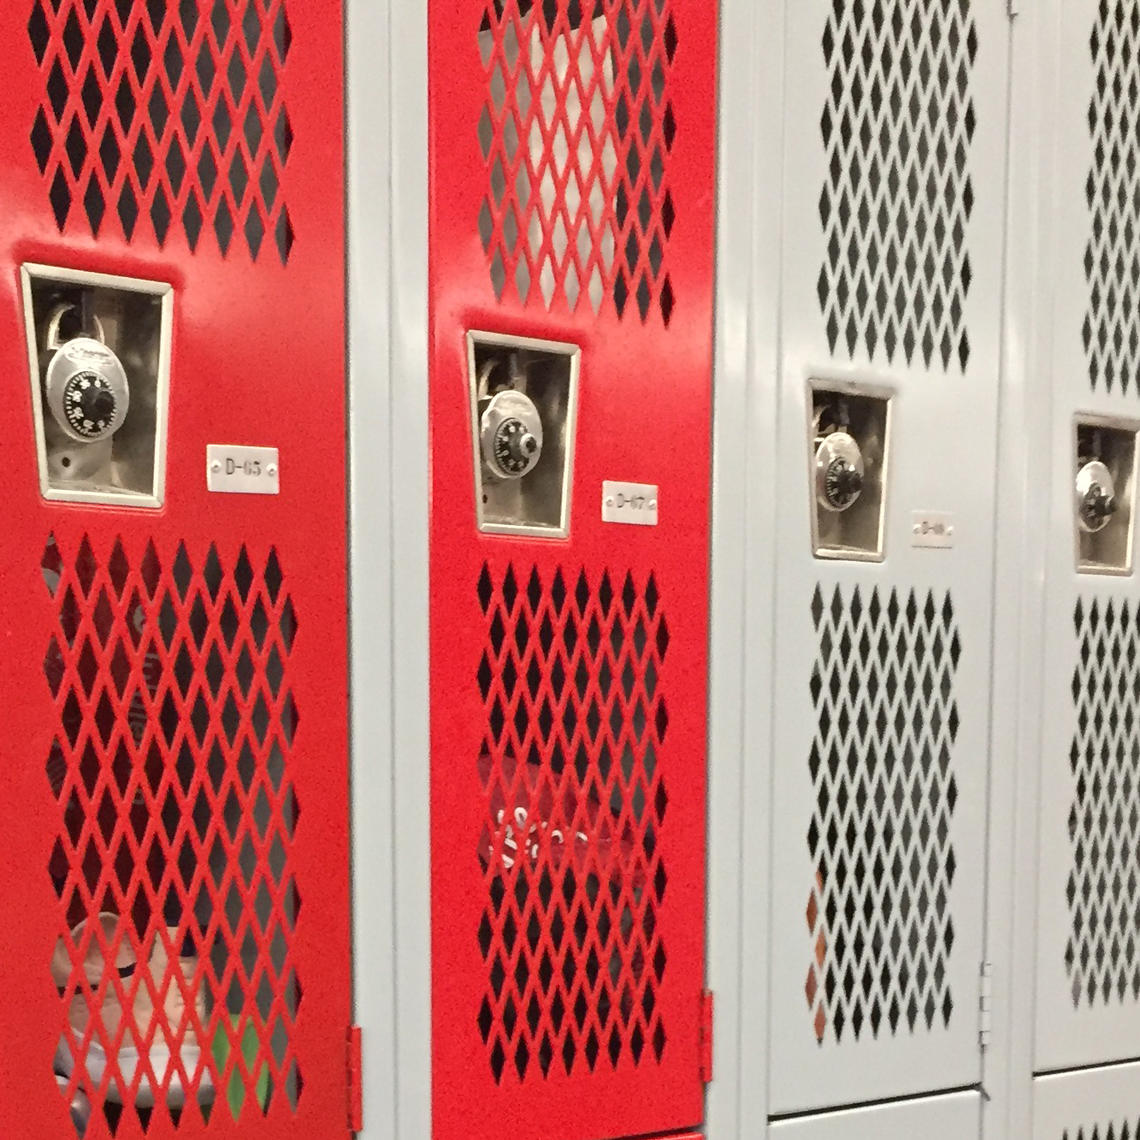 changing room lockers